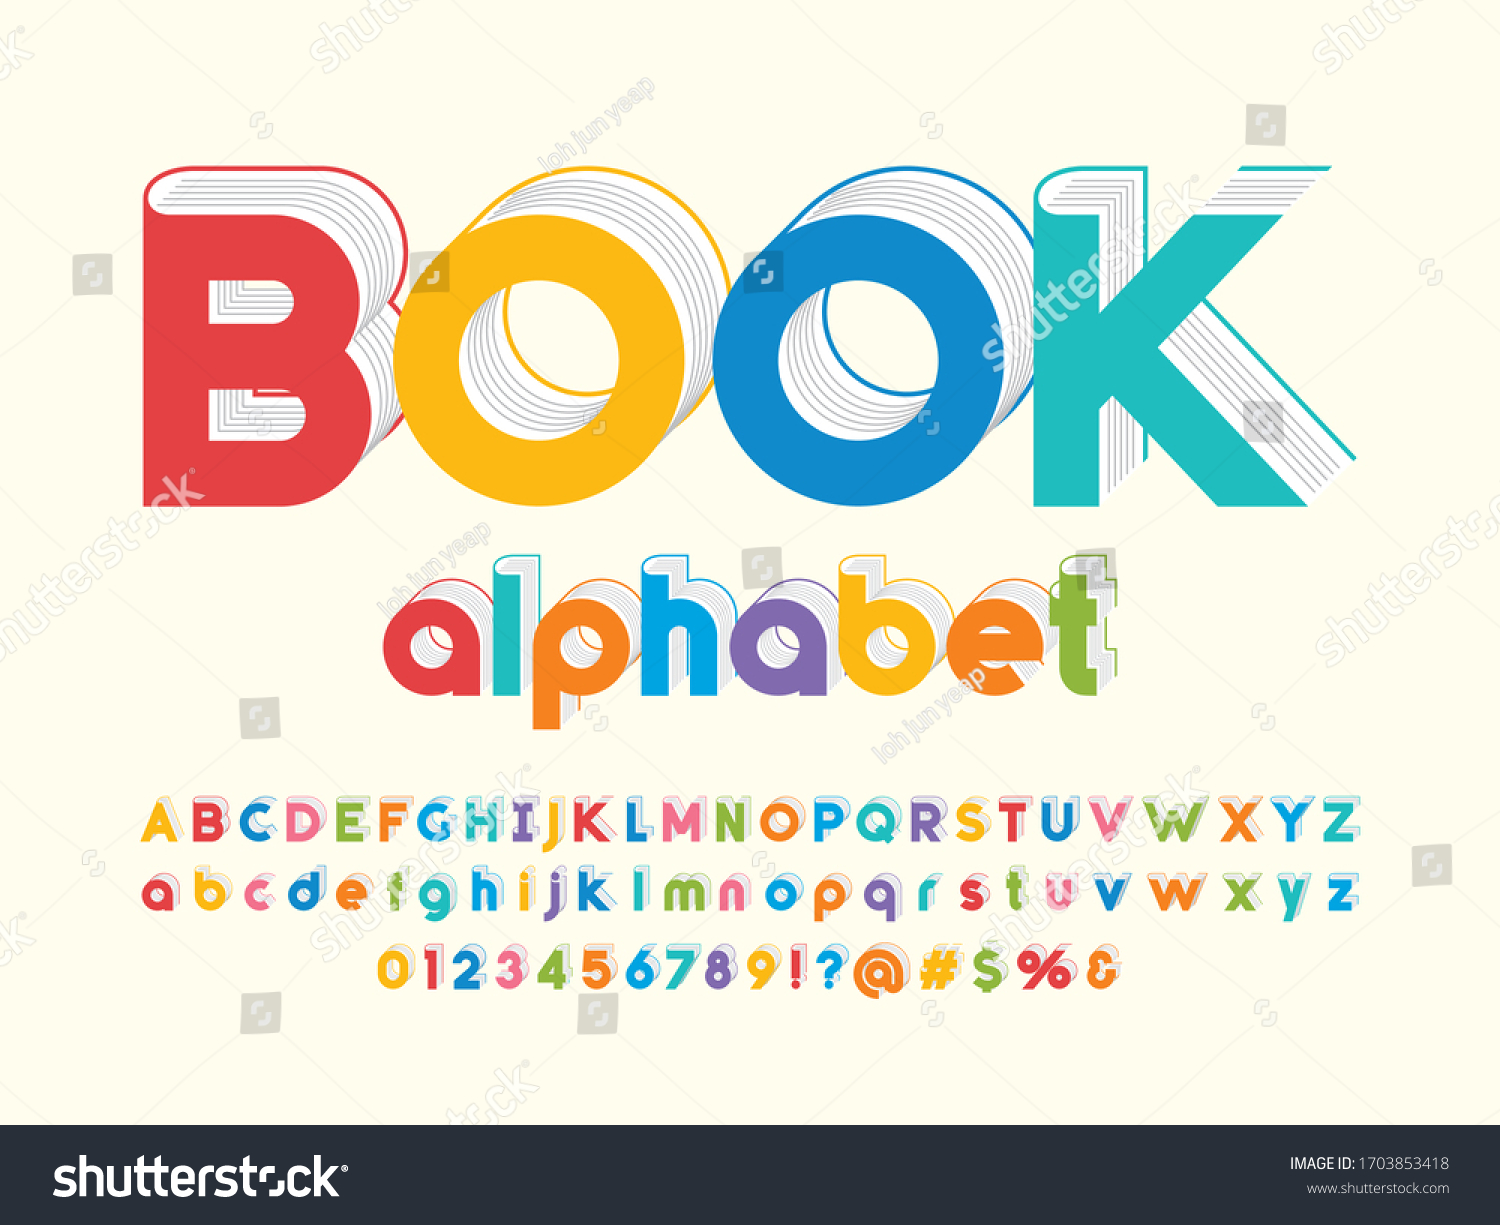 200,306 Alphabets book Images, Stock Photos & Vectors | Shutterstock